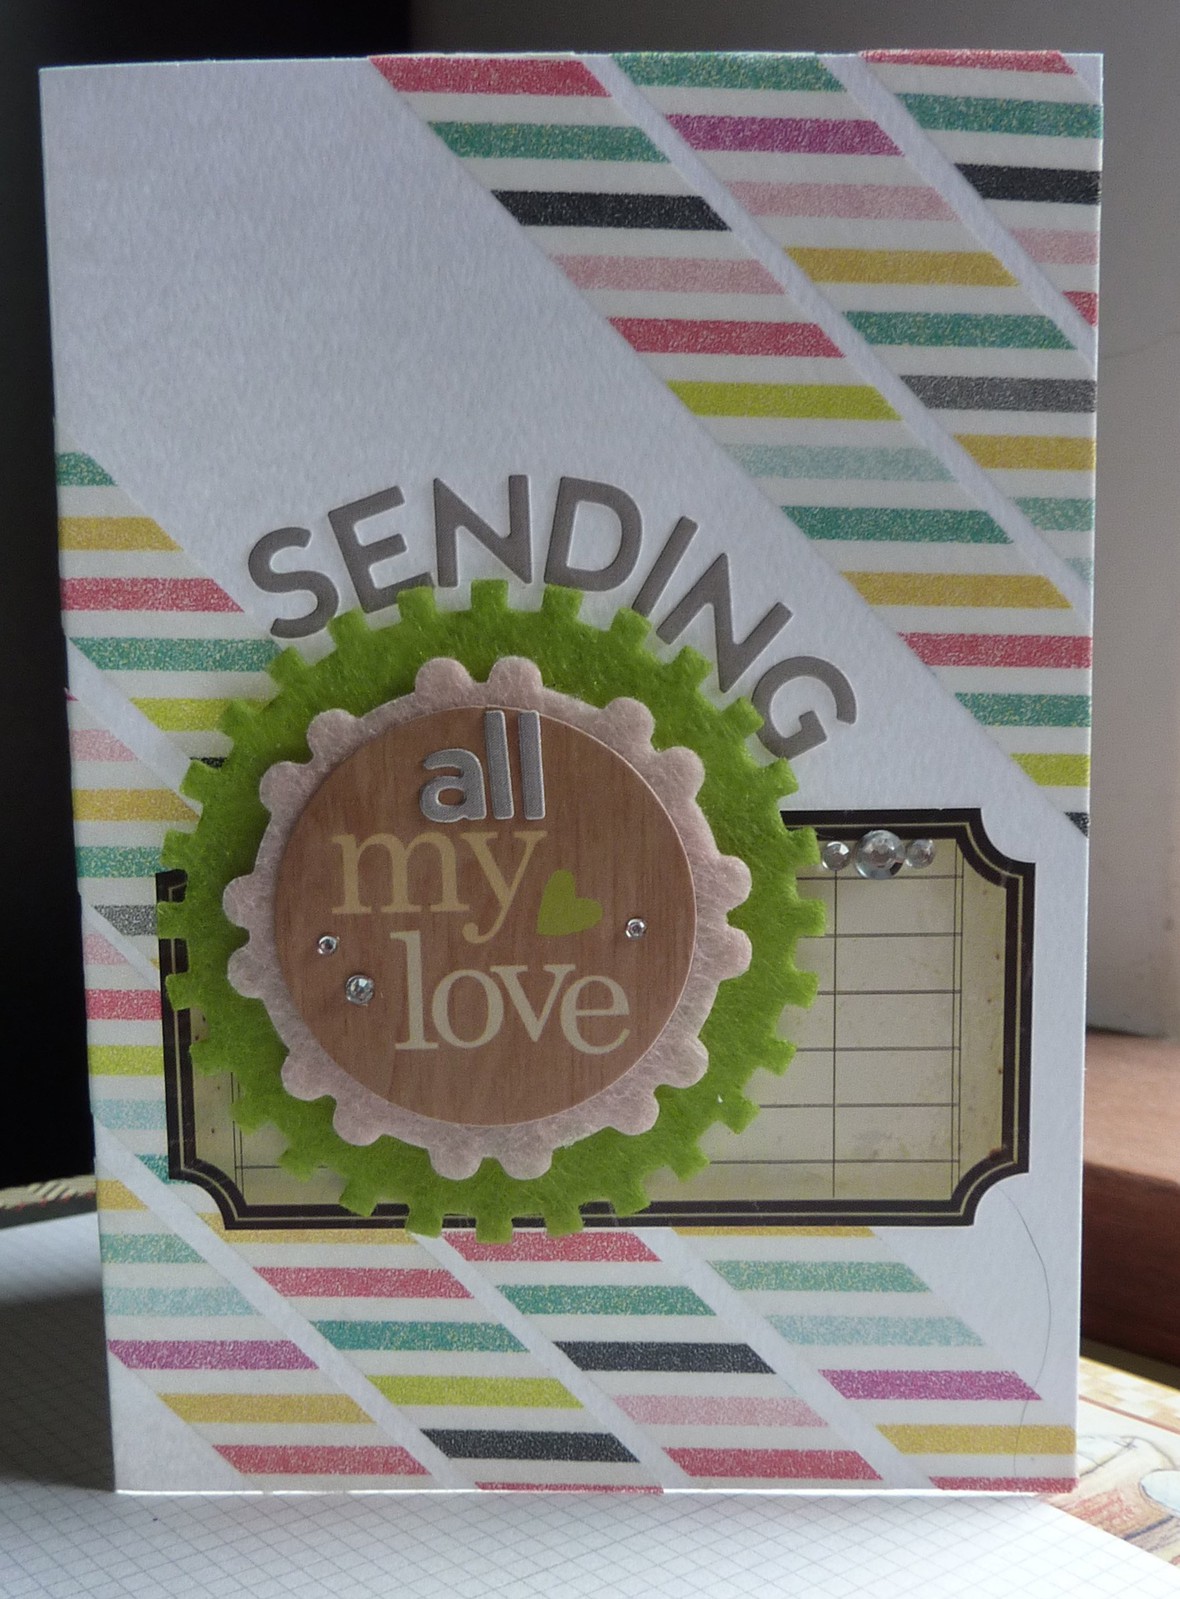 Sending all my love card original